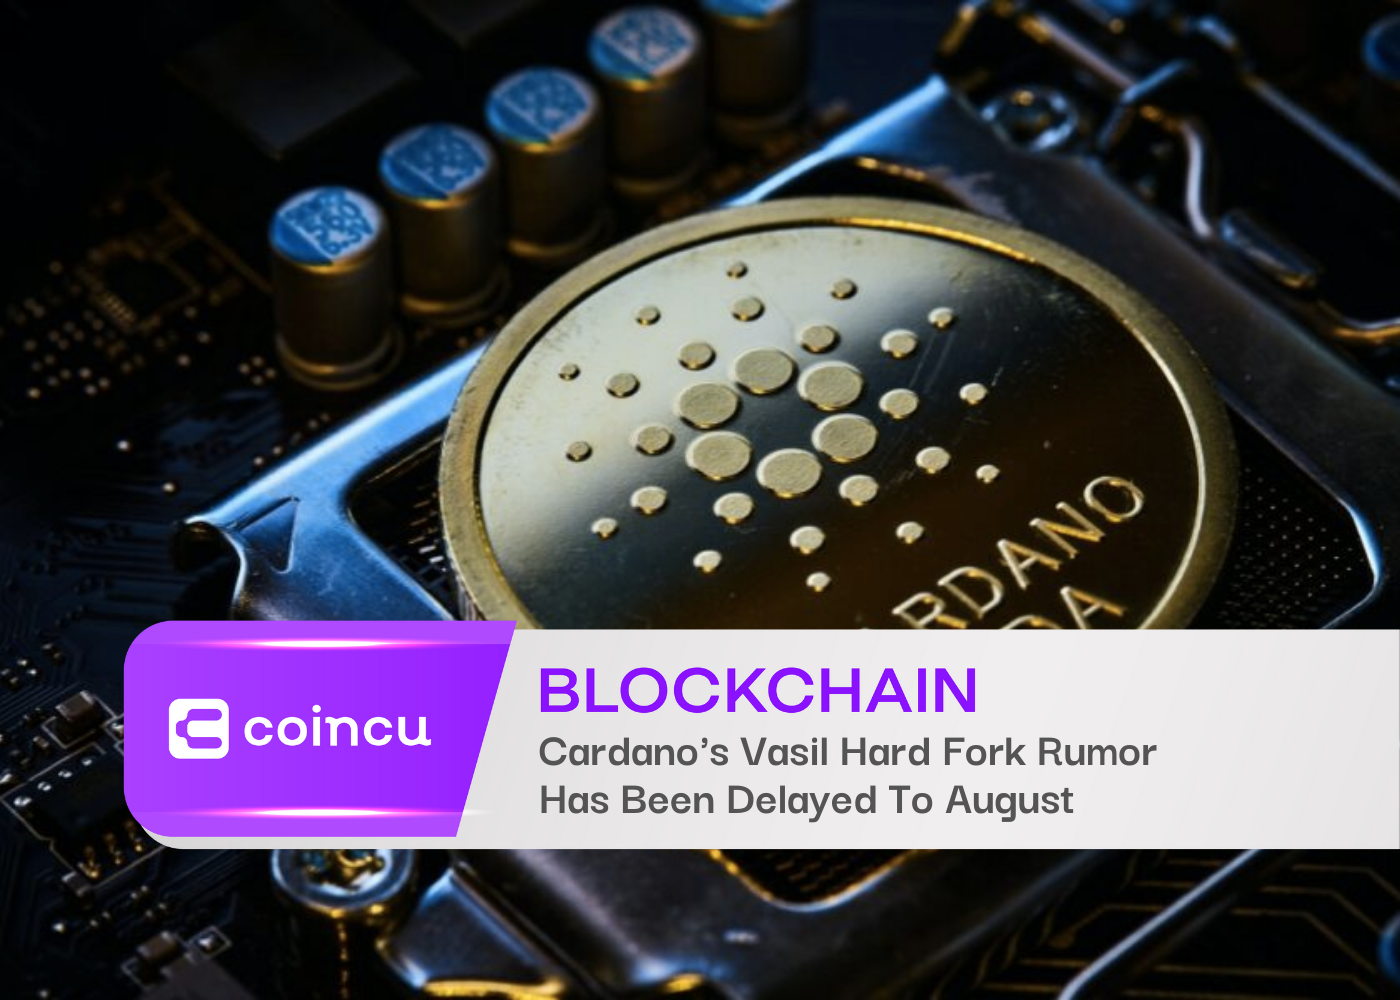 Cardano's Vasil Hard Fork Rumor Has Been Delayed To August